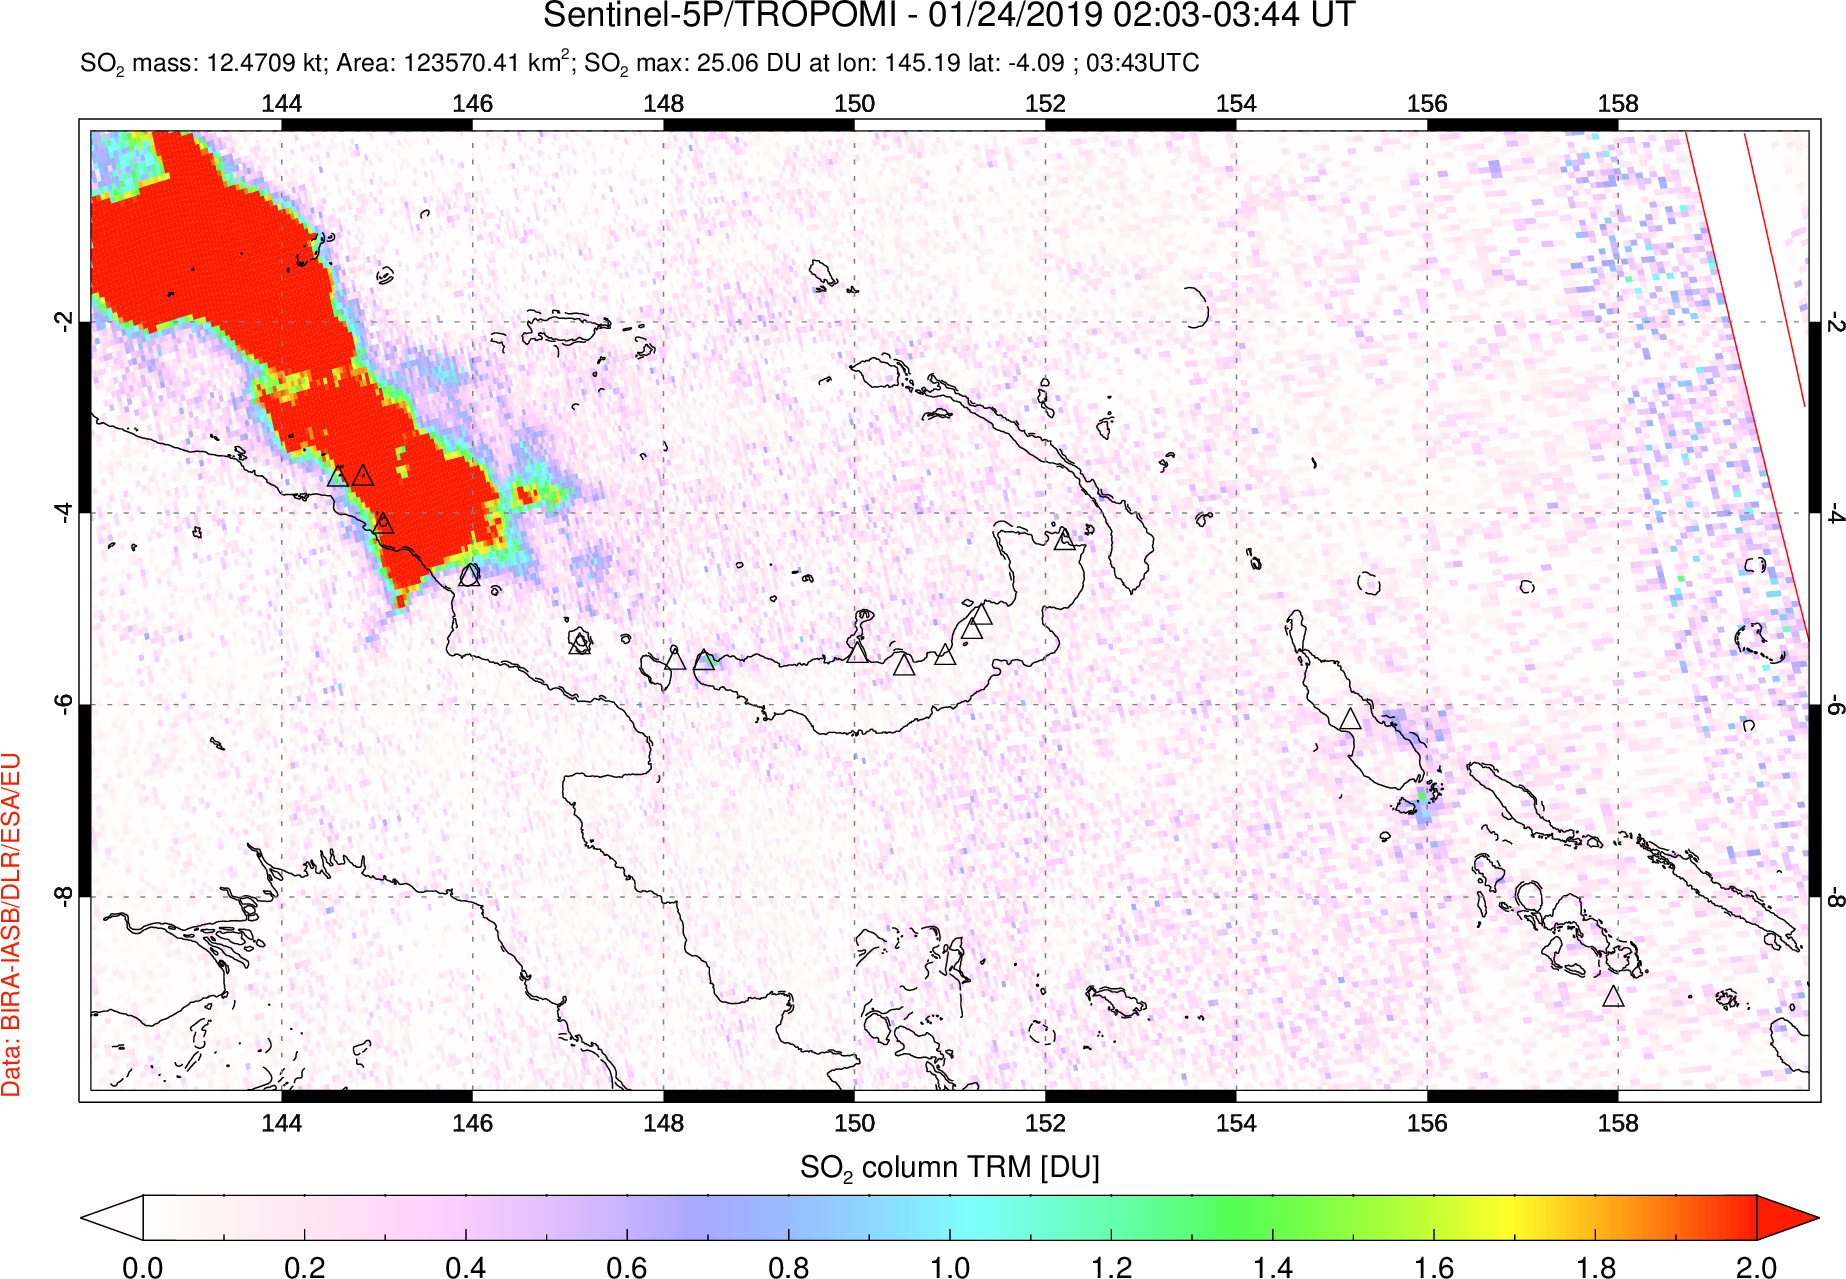 A sulfur dioxide image over Papua, New Guinea on Jan 24, 2019.